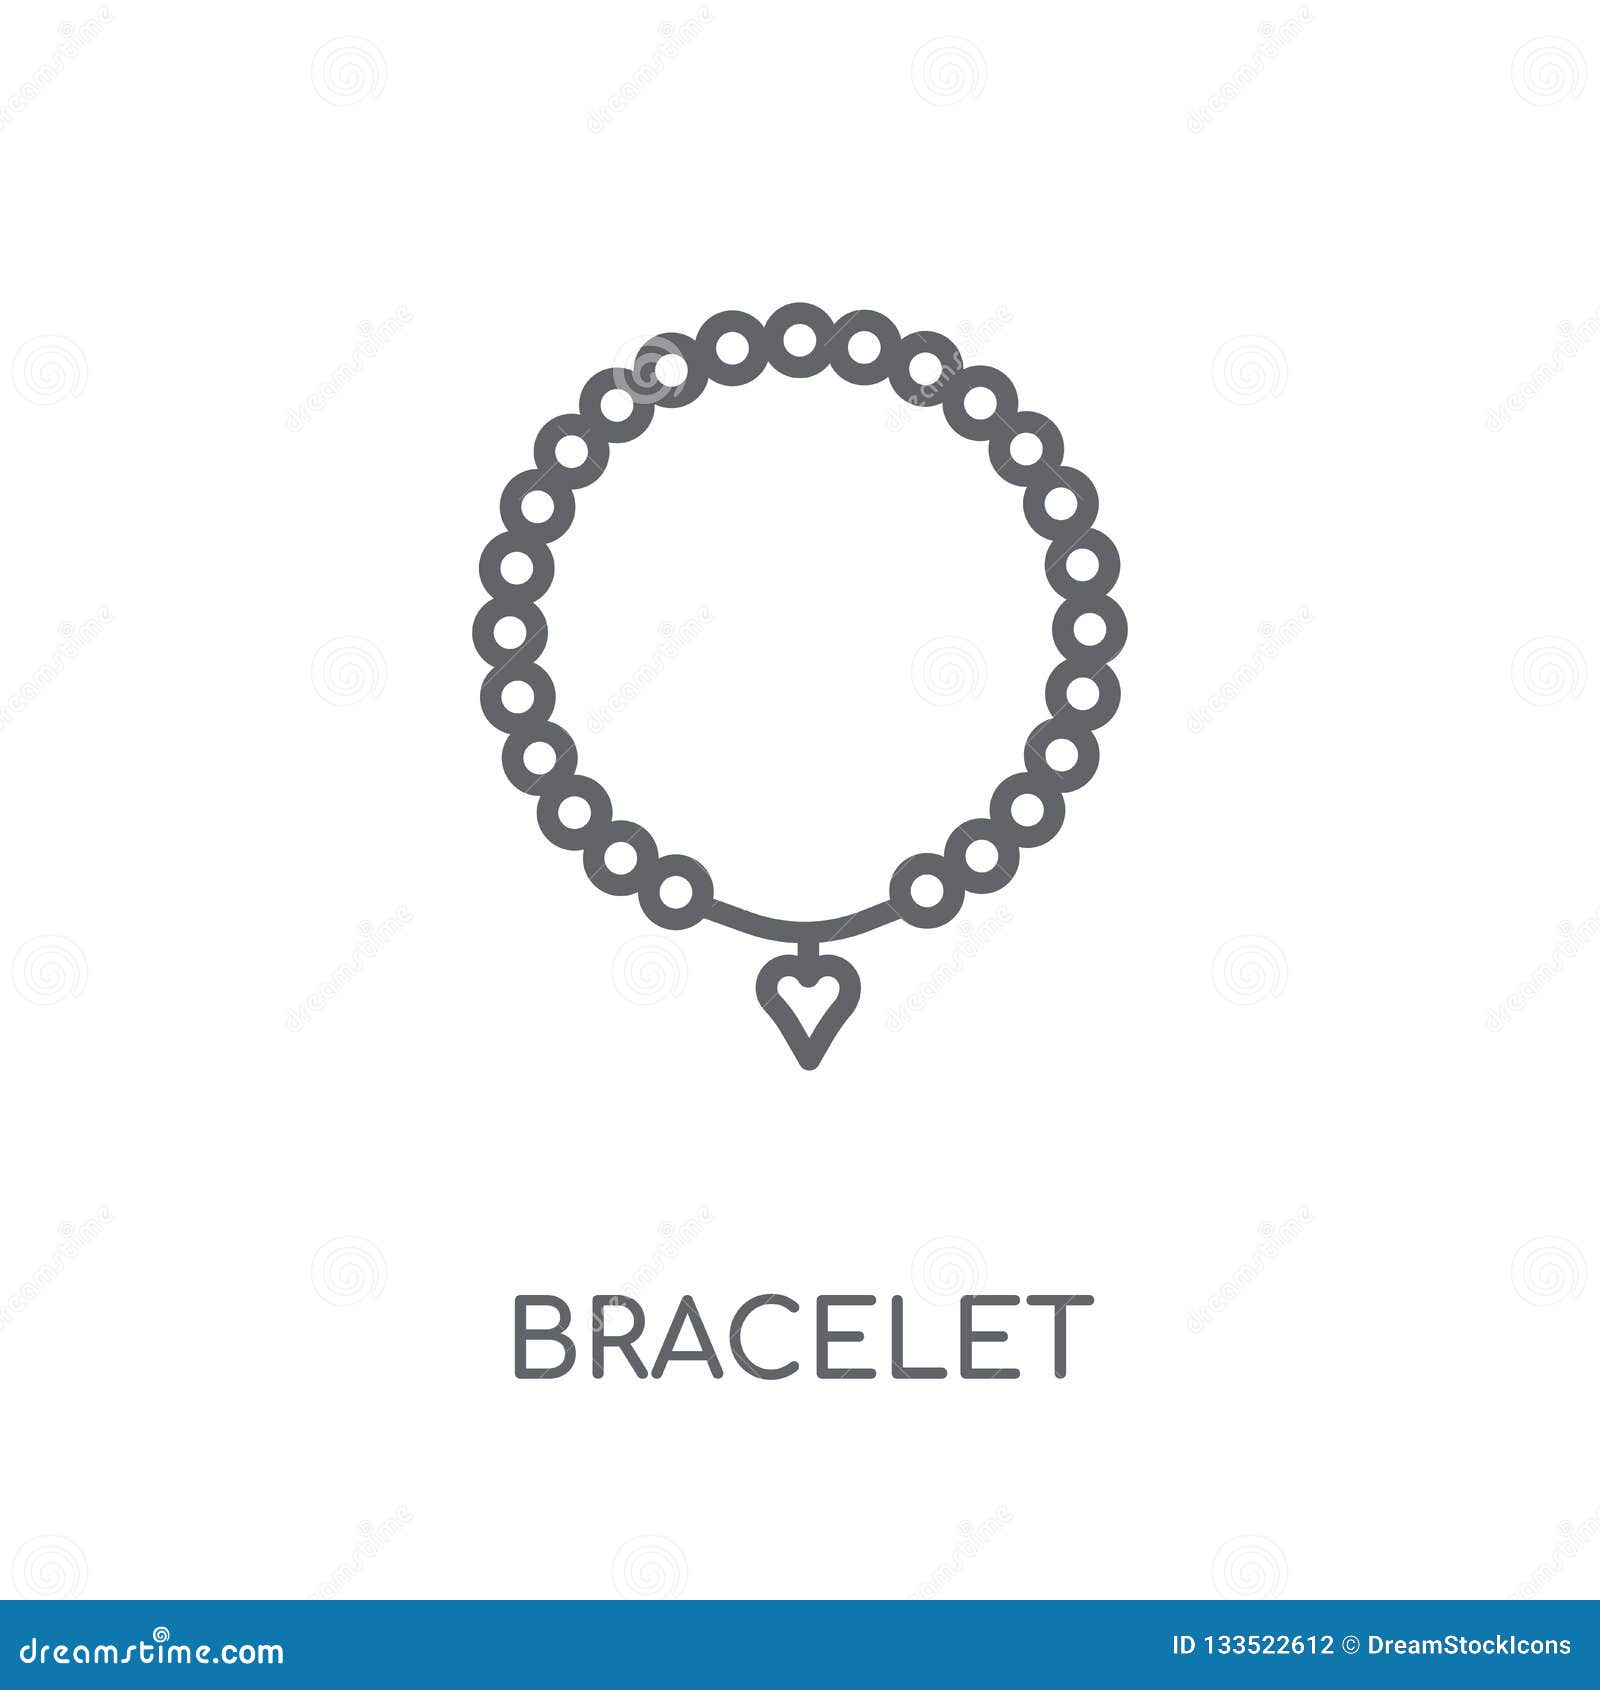 bracelet linear icon. modern outline bracelet logo concept on wh